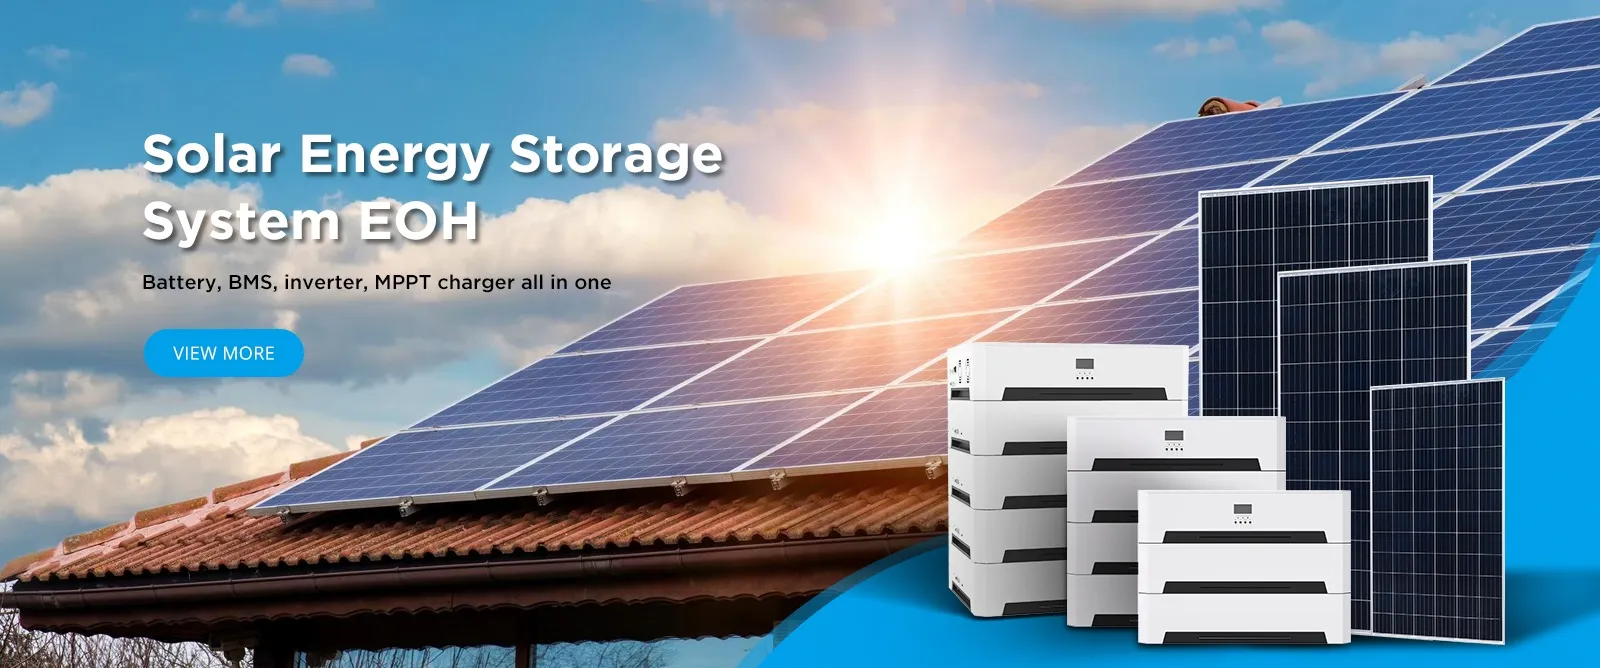 Energy storage and Solar panels